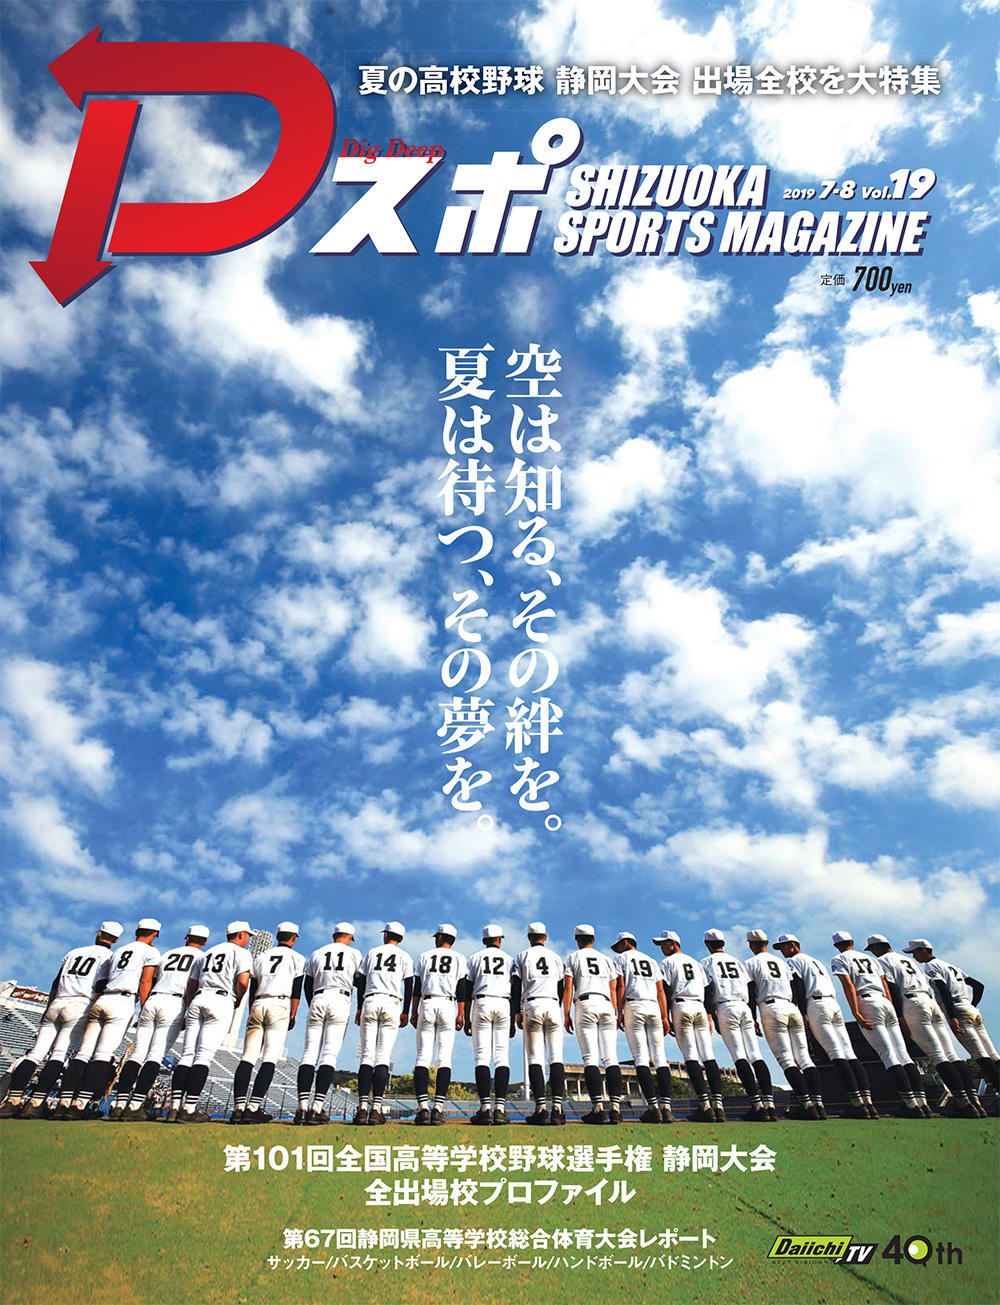 http://d-sports.shizuokastandard.jp/article/2019/19_H1.jpg